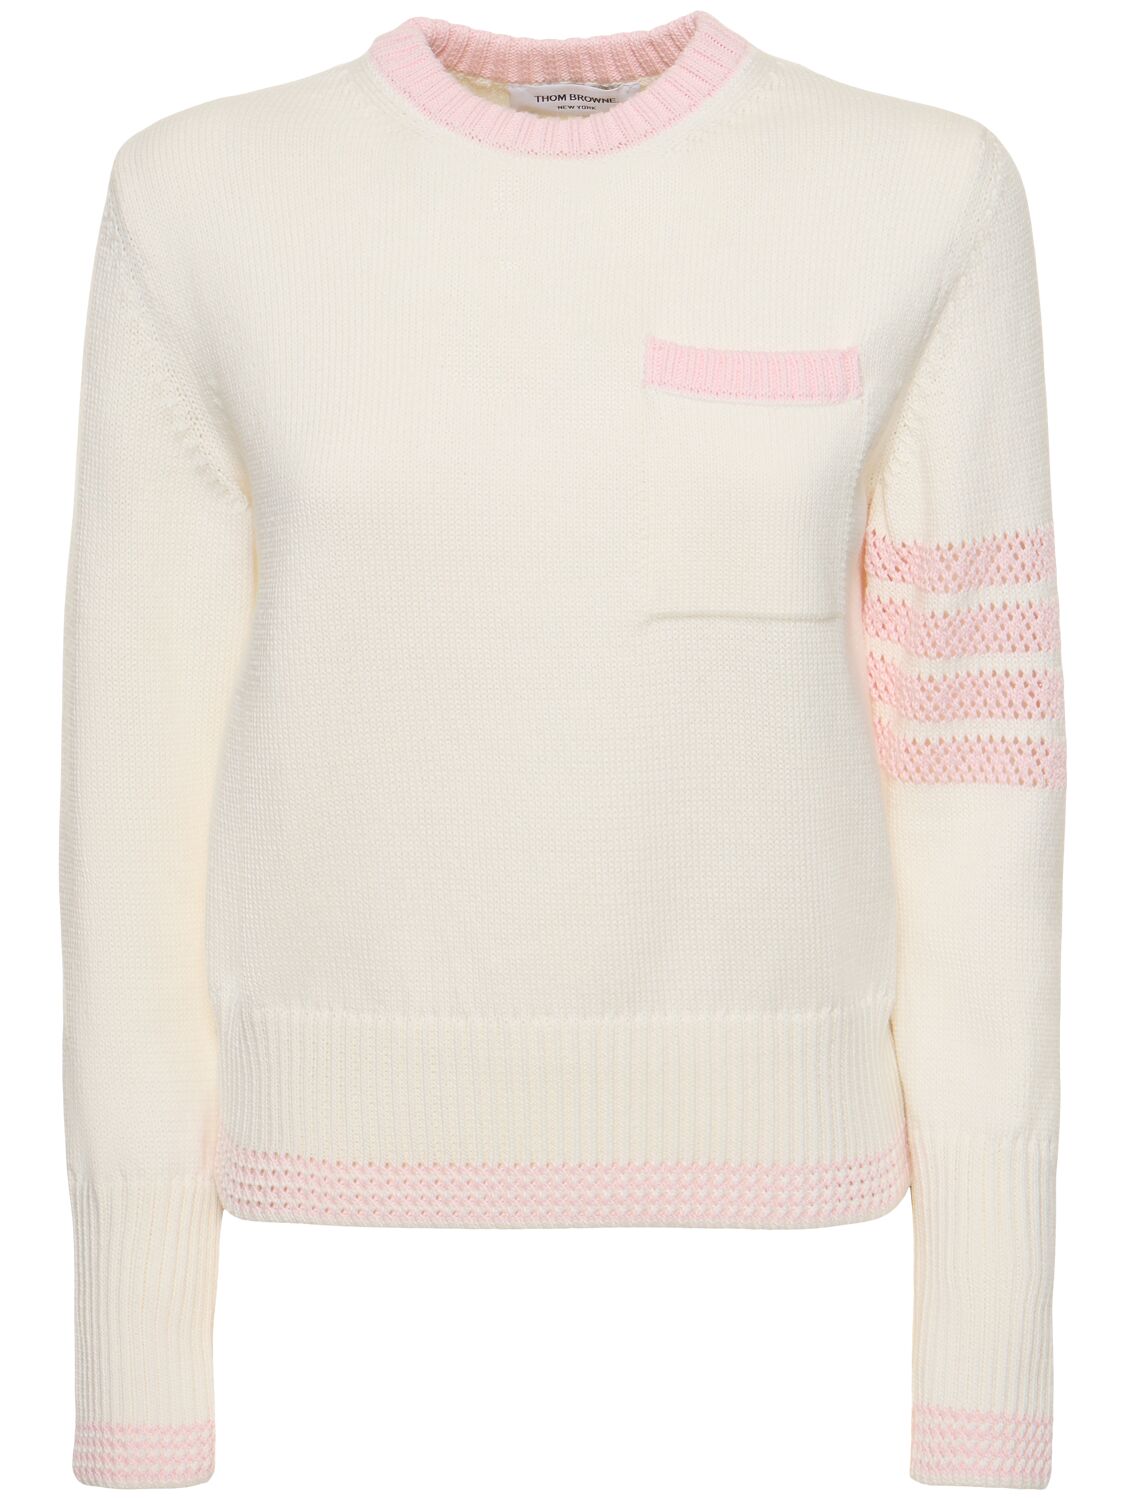 Thom Browne Cotton Knit 4 Stripe Sweater W/ Pocket In White,pink